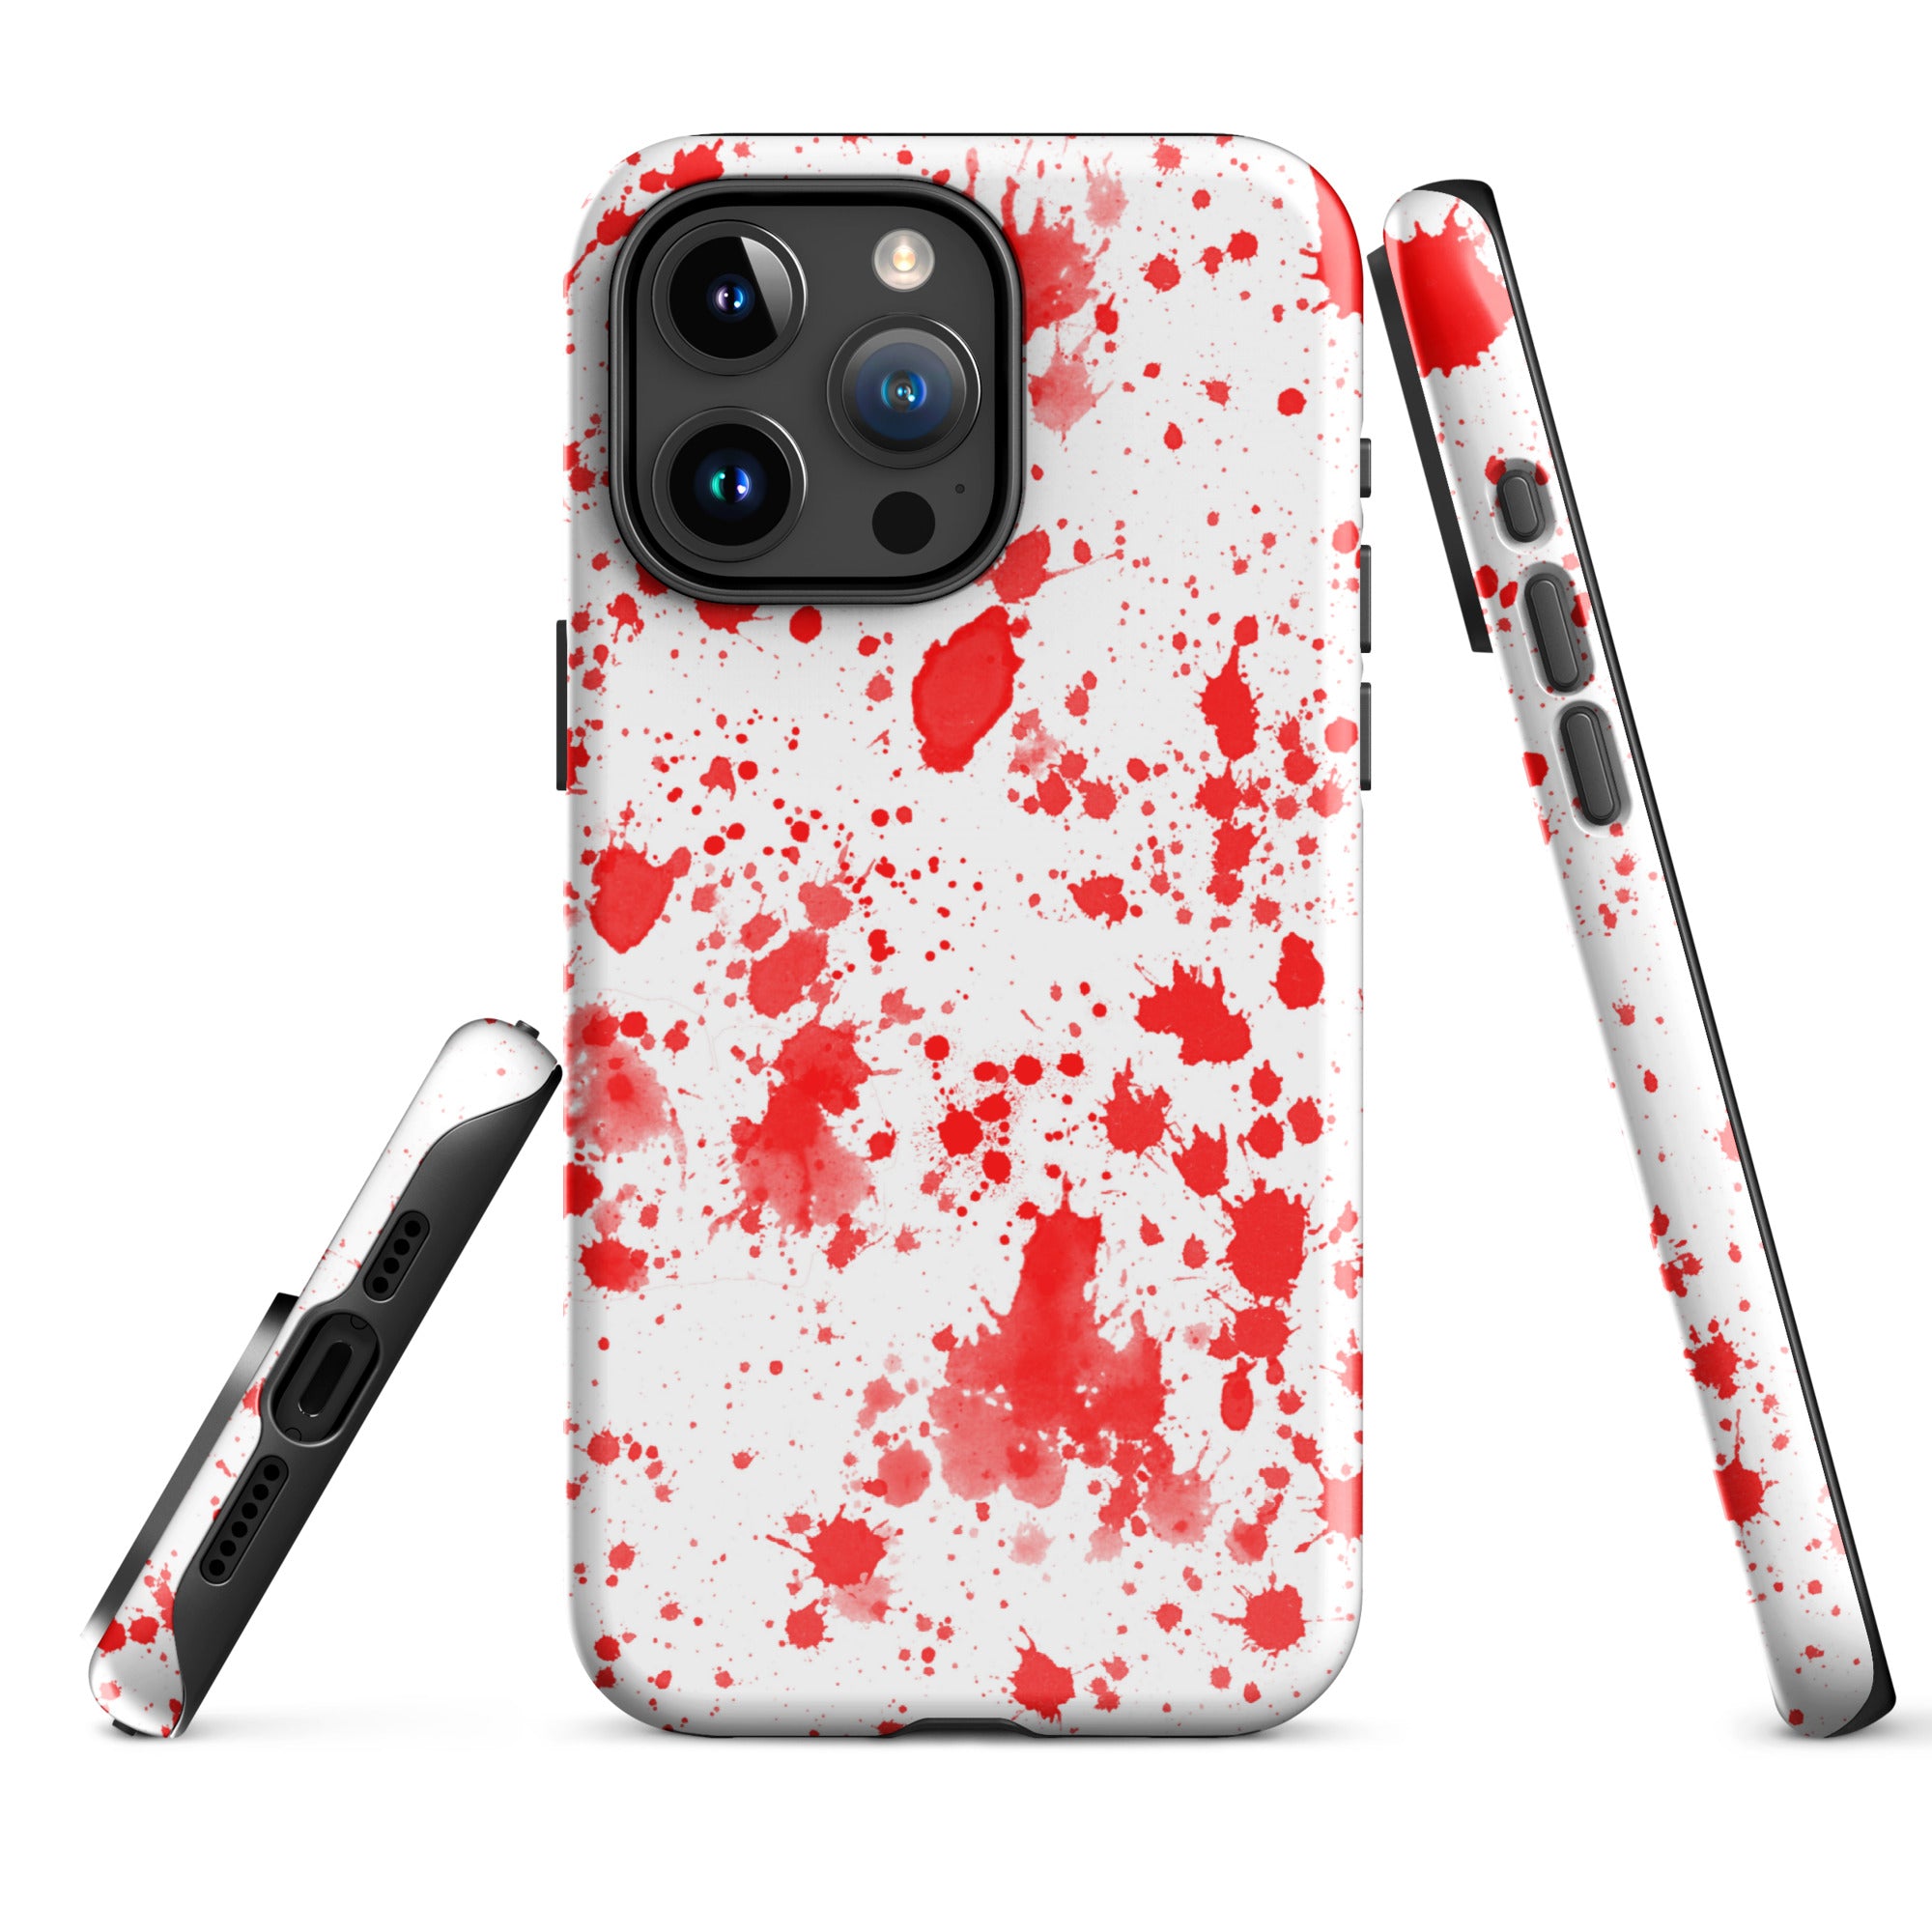 Tough Case for iPhone - Paint Splatter